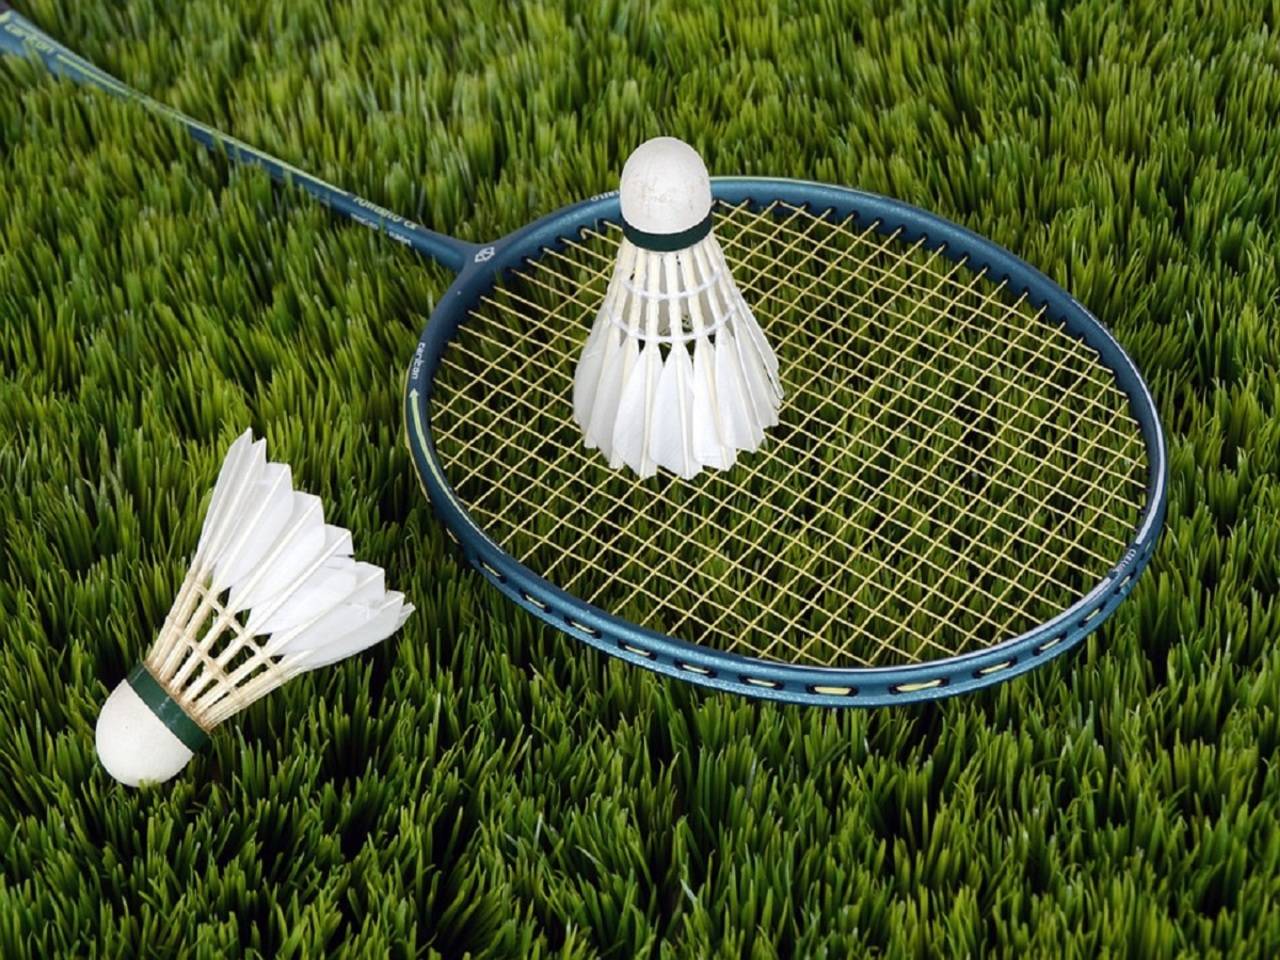 Badminton Rackets 7 Popular badminton rackets for kids and adults; Top choices from Cosco, Yonex, Li-Ning, Feroc, etc 